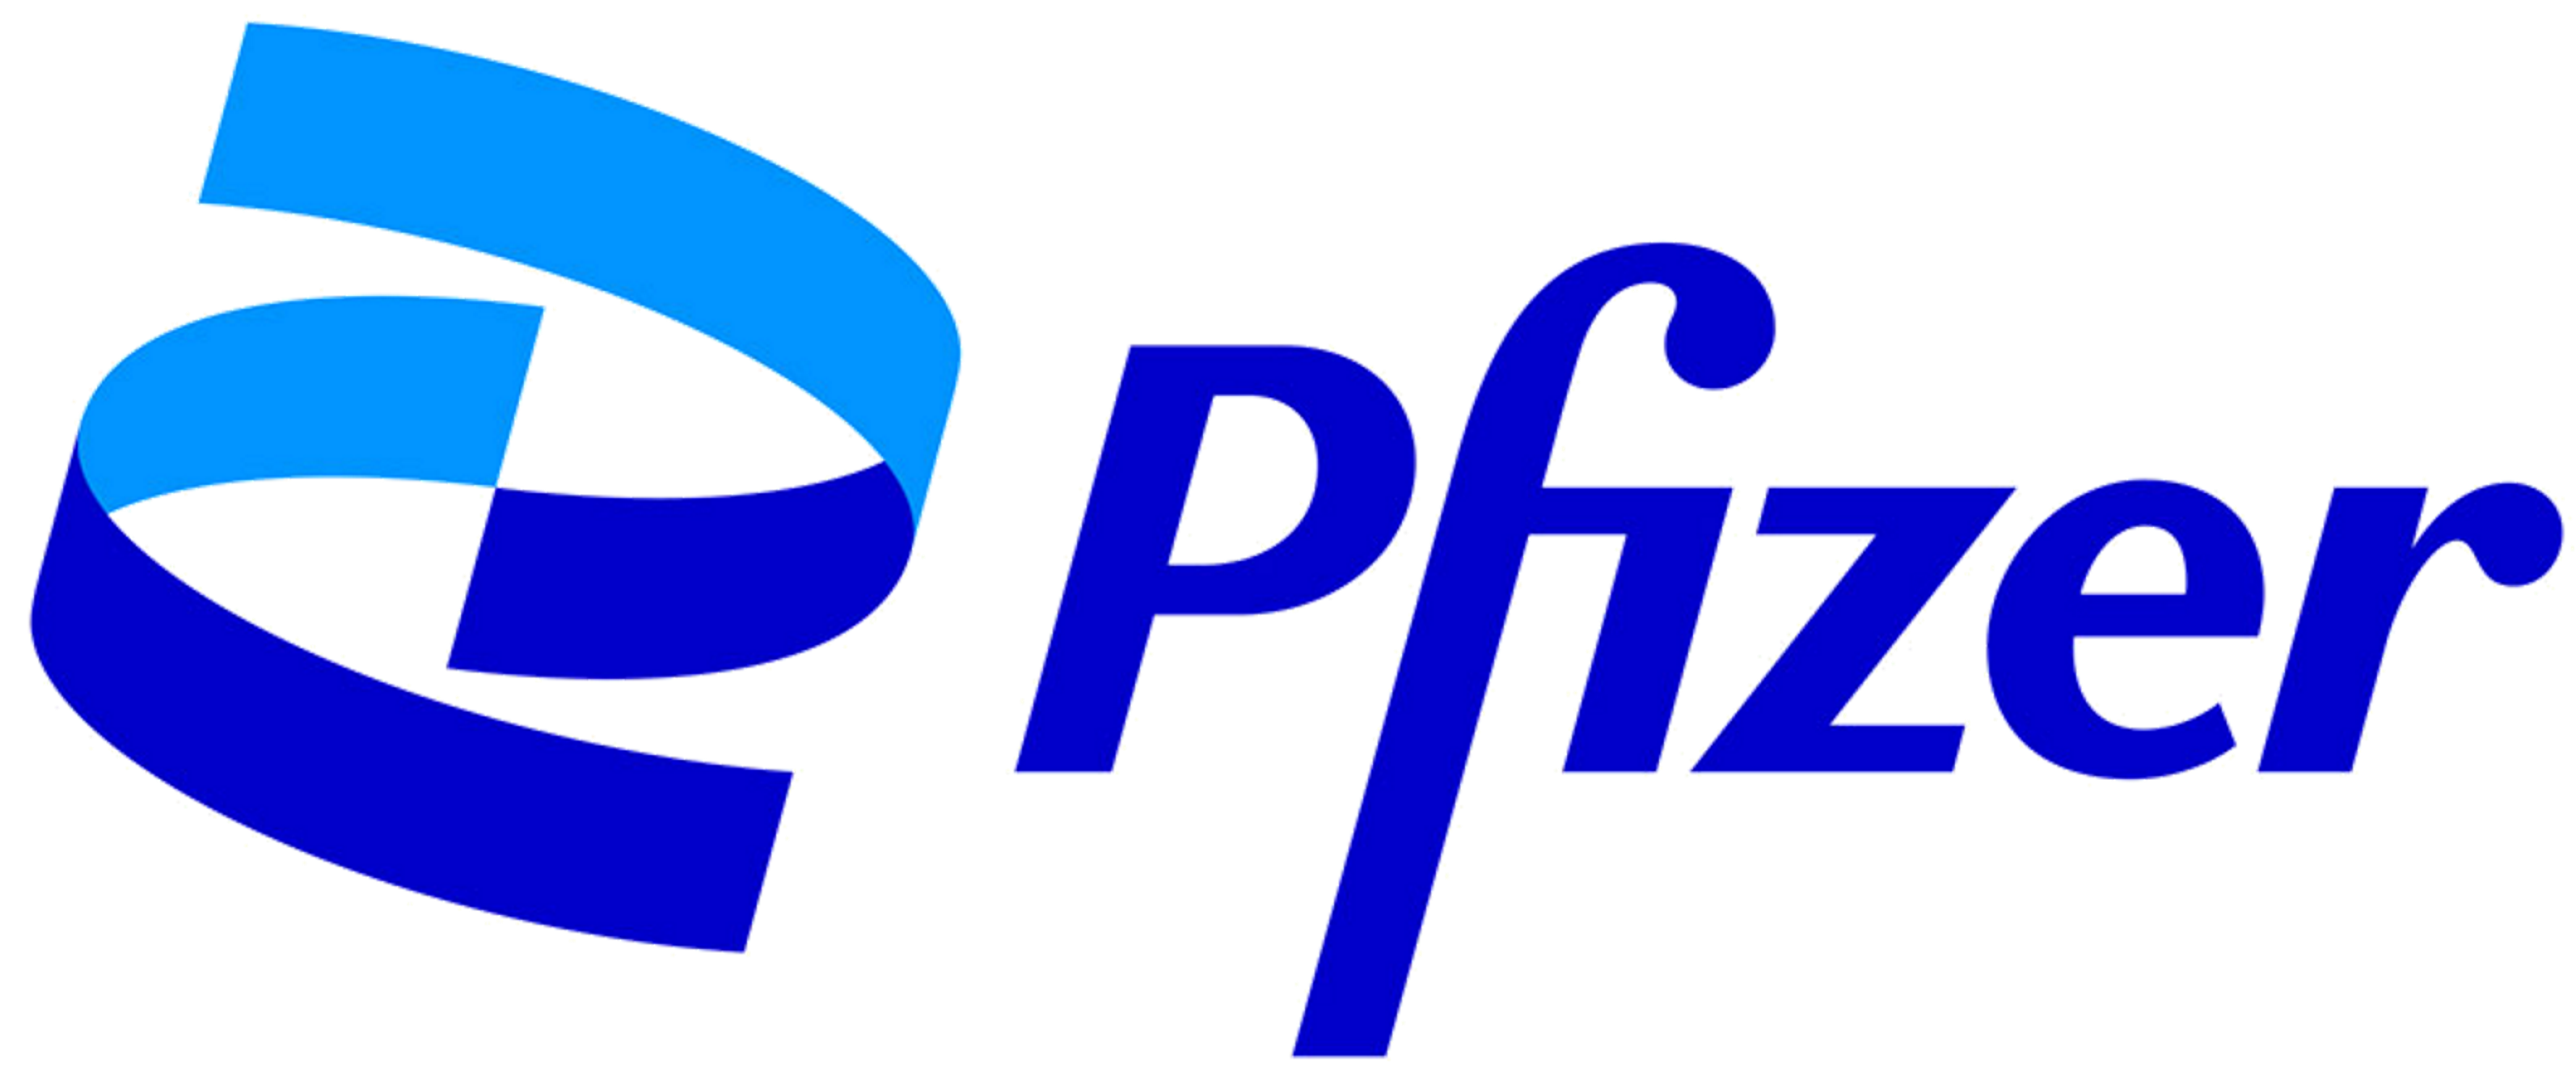 pfizer_20210109-1